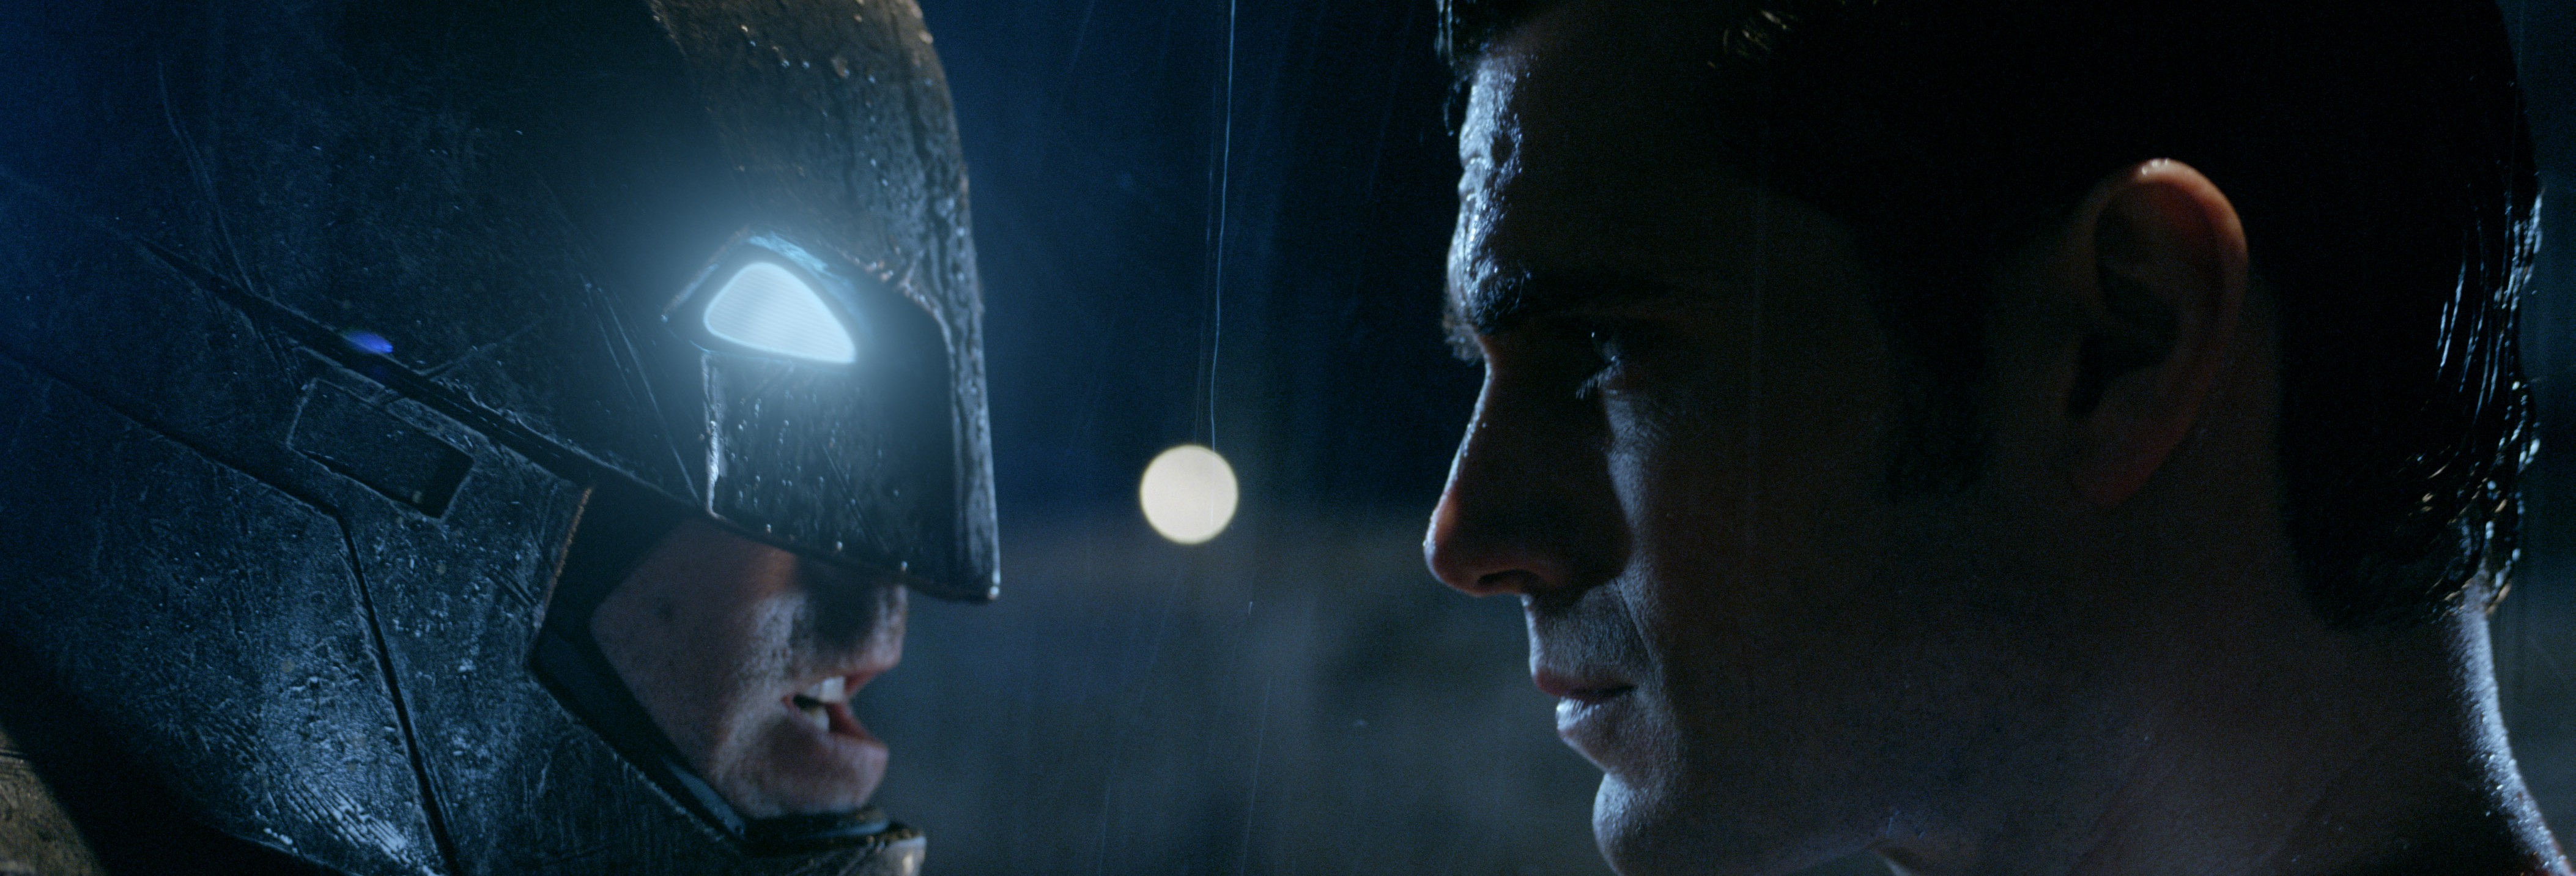 Nieuwe trailer Batman v Superman: Dawn of Justice